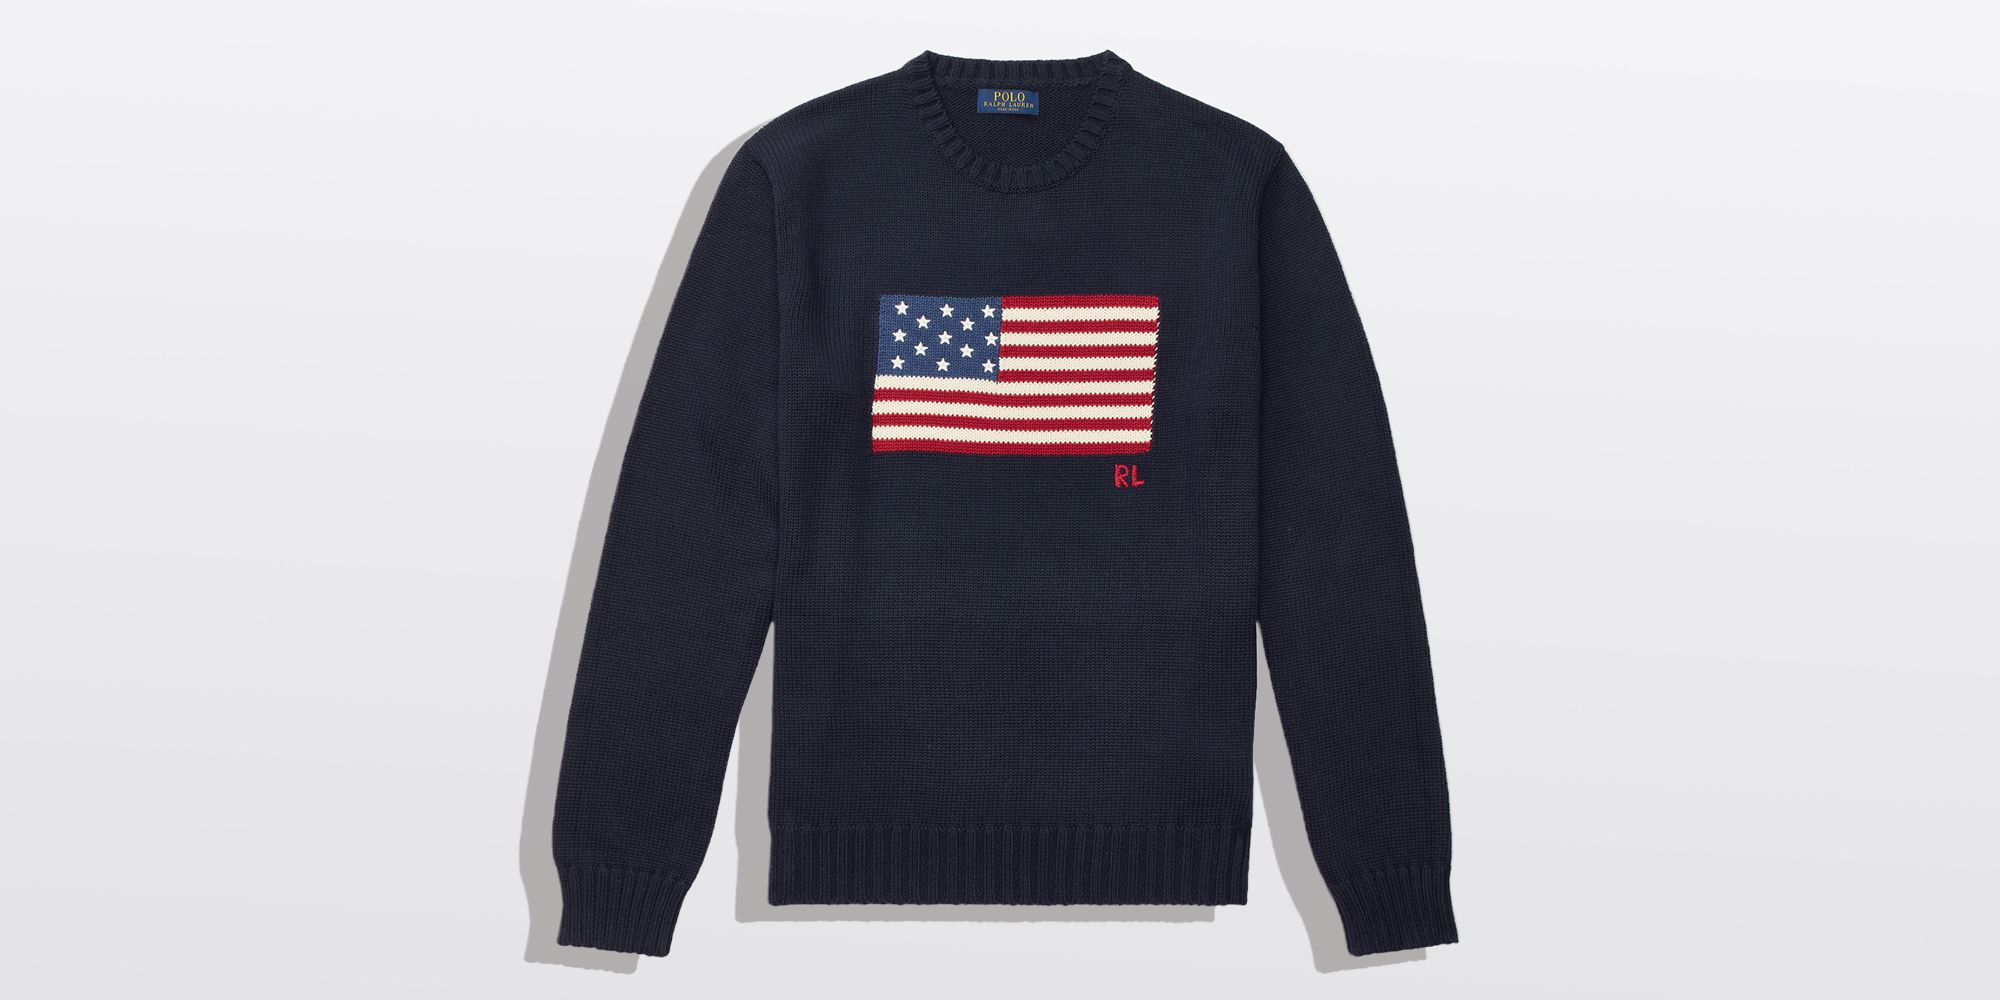 flicker Scully Kritisk Ralph Lauren Iconic Flag Sweater for Men Review 2022